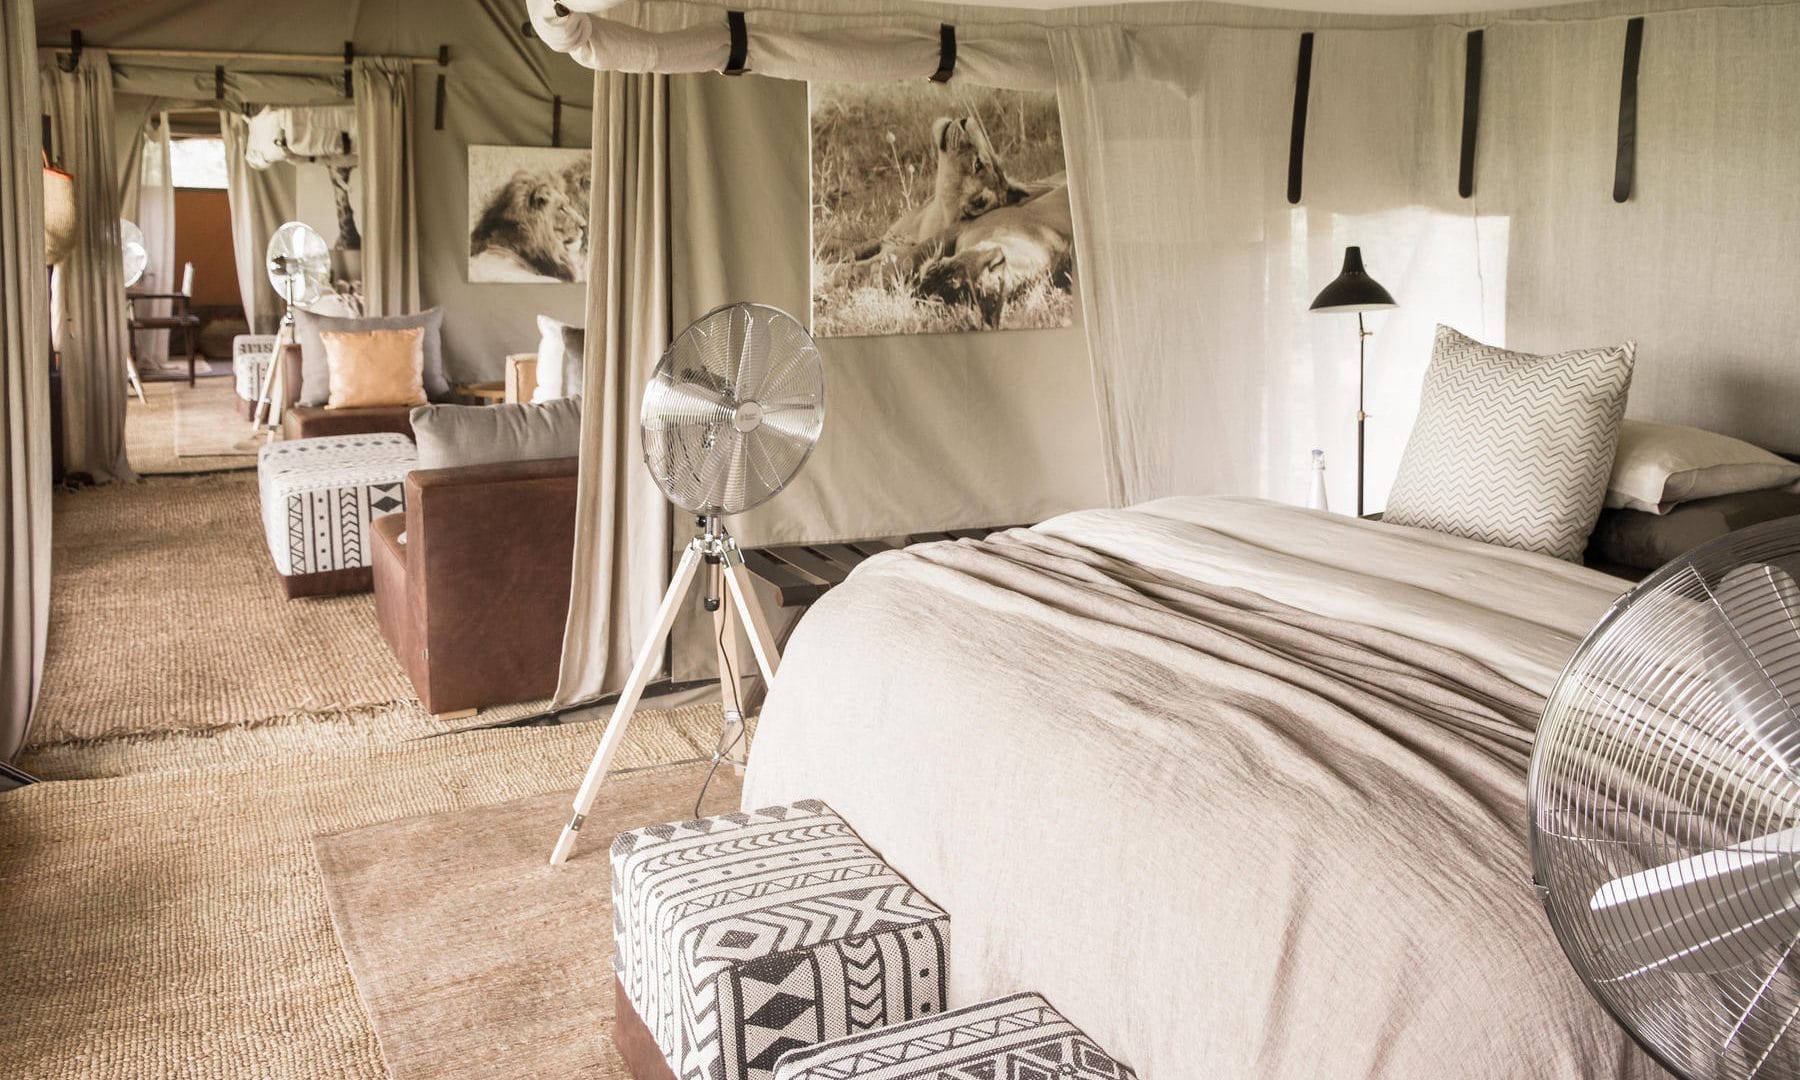 Mila Tented Camp (Legendary Expeditions), Serengeti Tanzania - AfricanMecca  Safaris & Tours